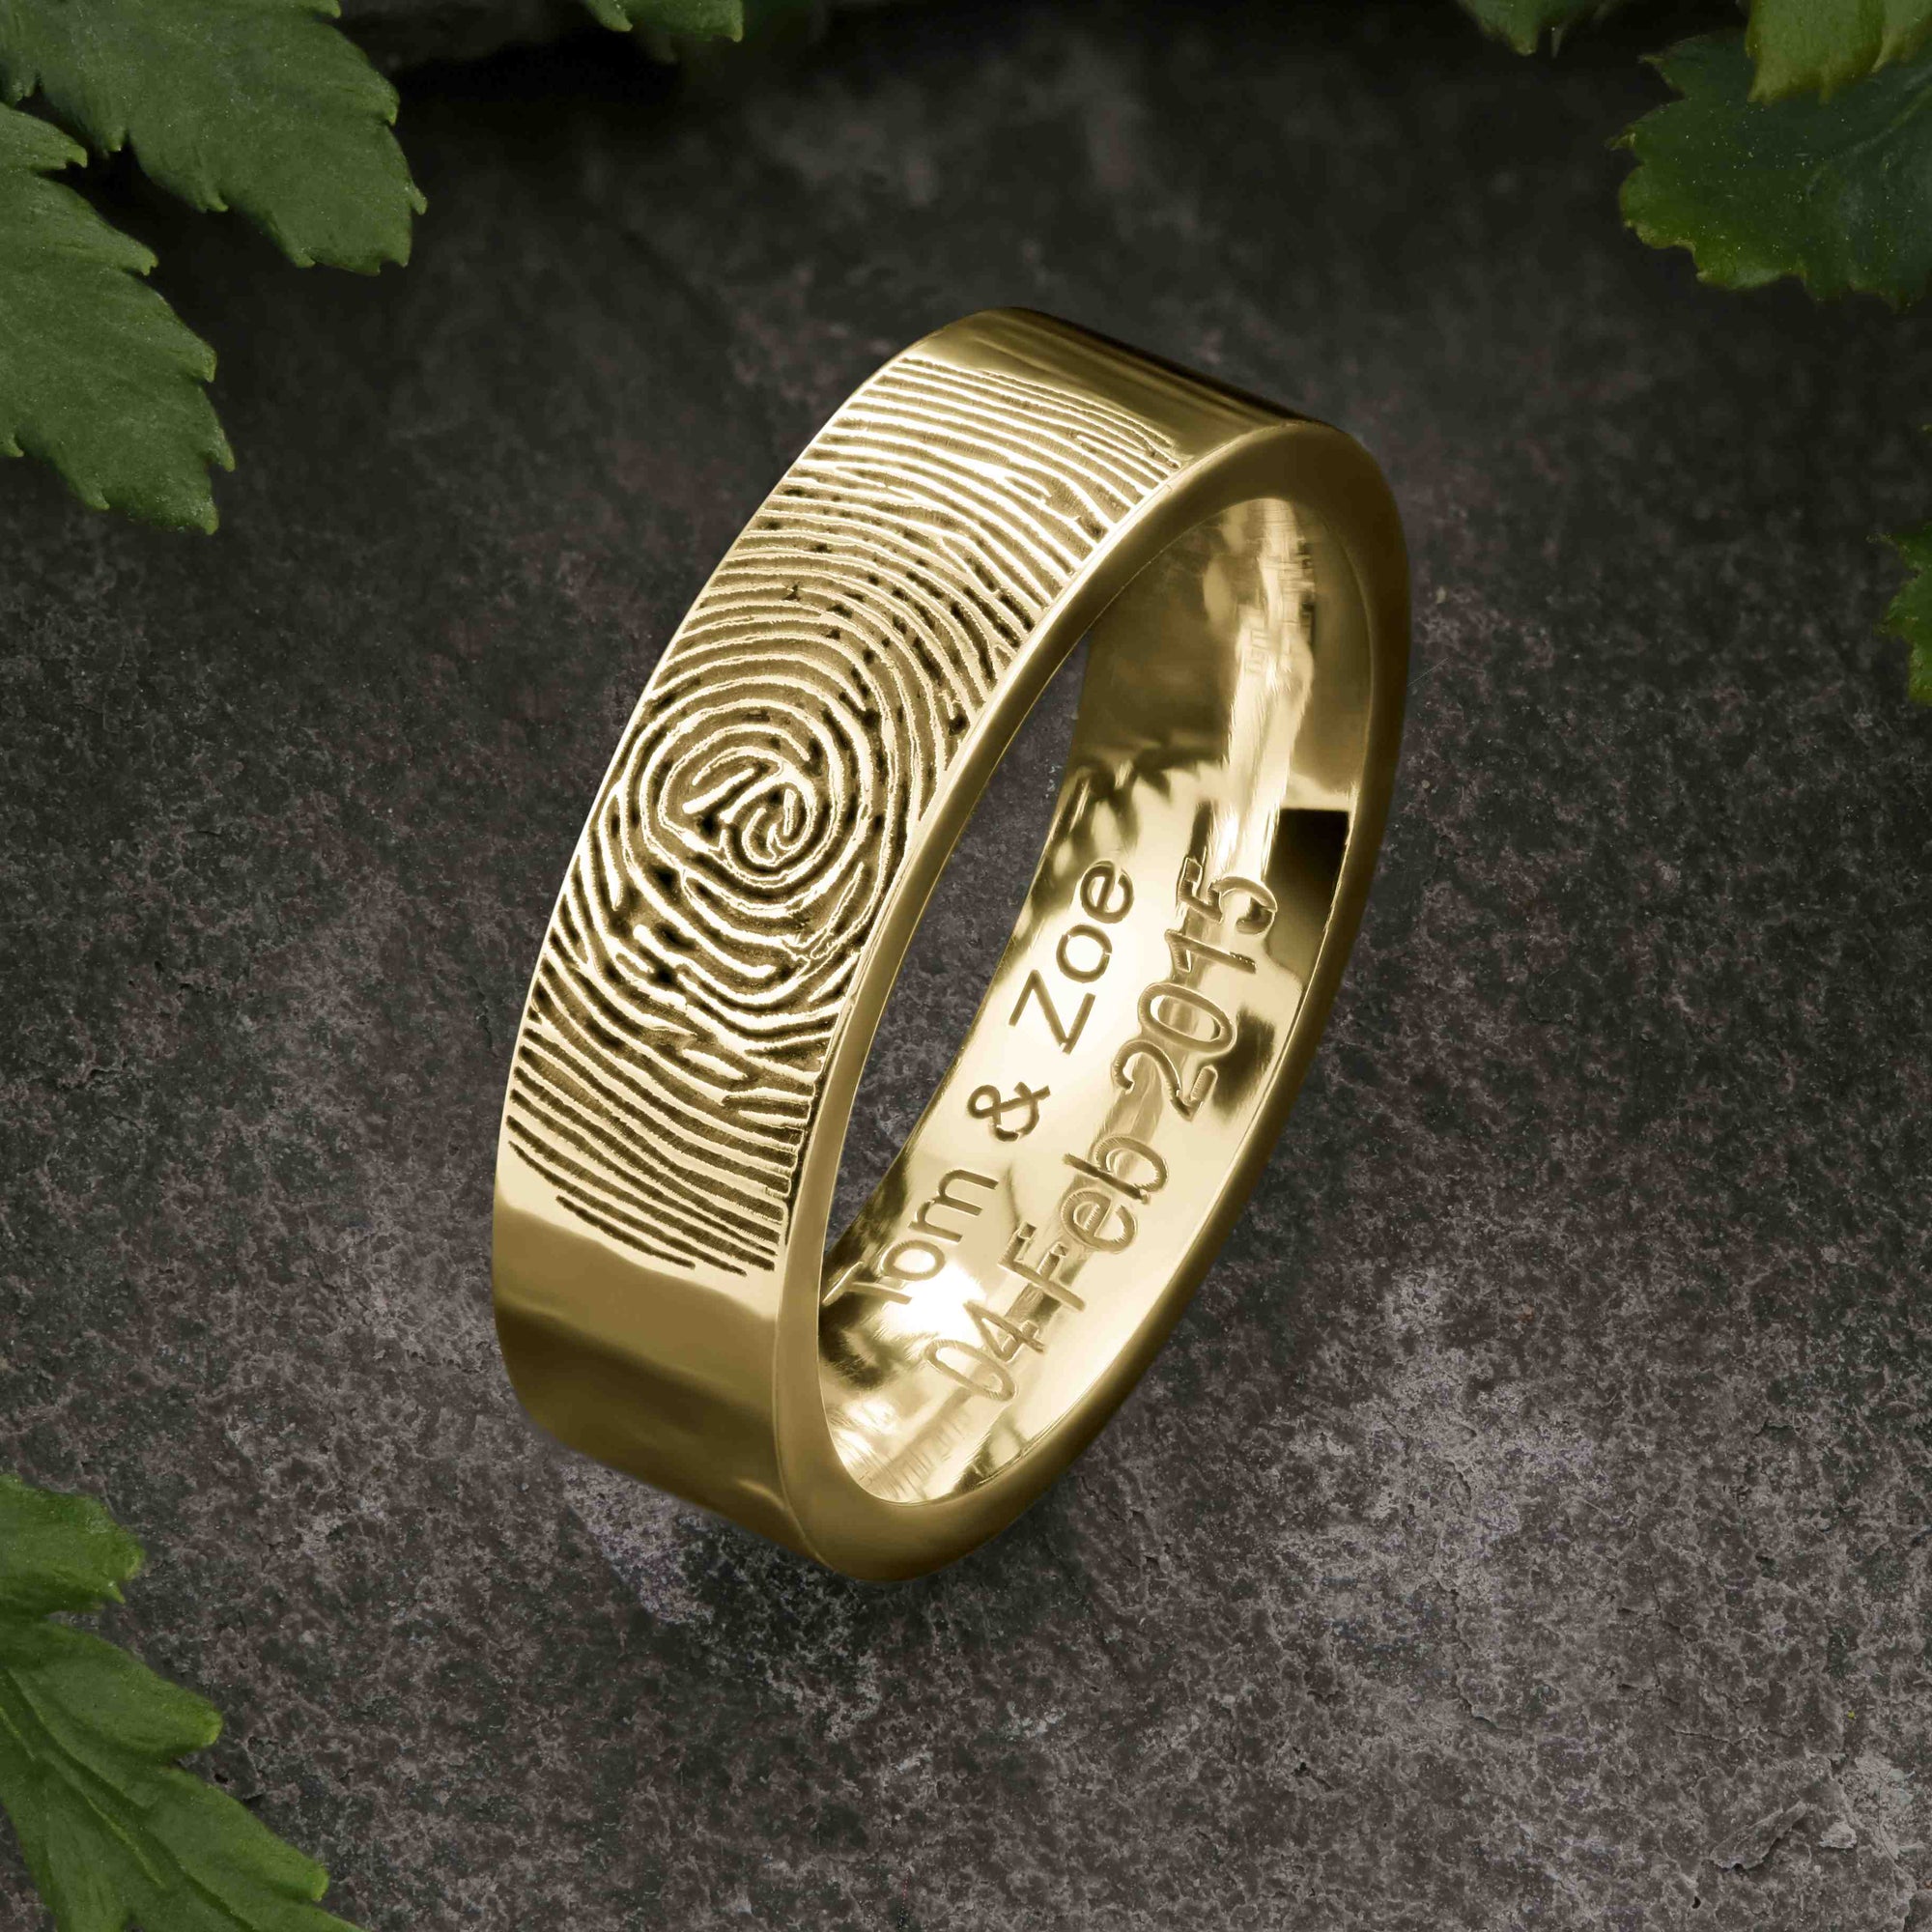 Gold Fingerprint Ring - LASER ENGRAVED GOLD FINGERPRINT RING 6mm FLAT PROFILE. Engraved Wedding Date.